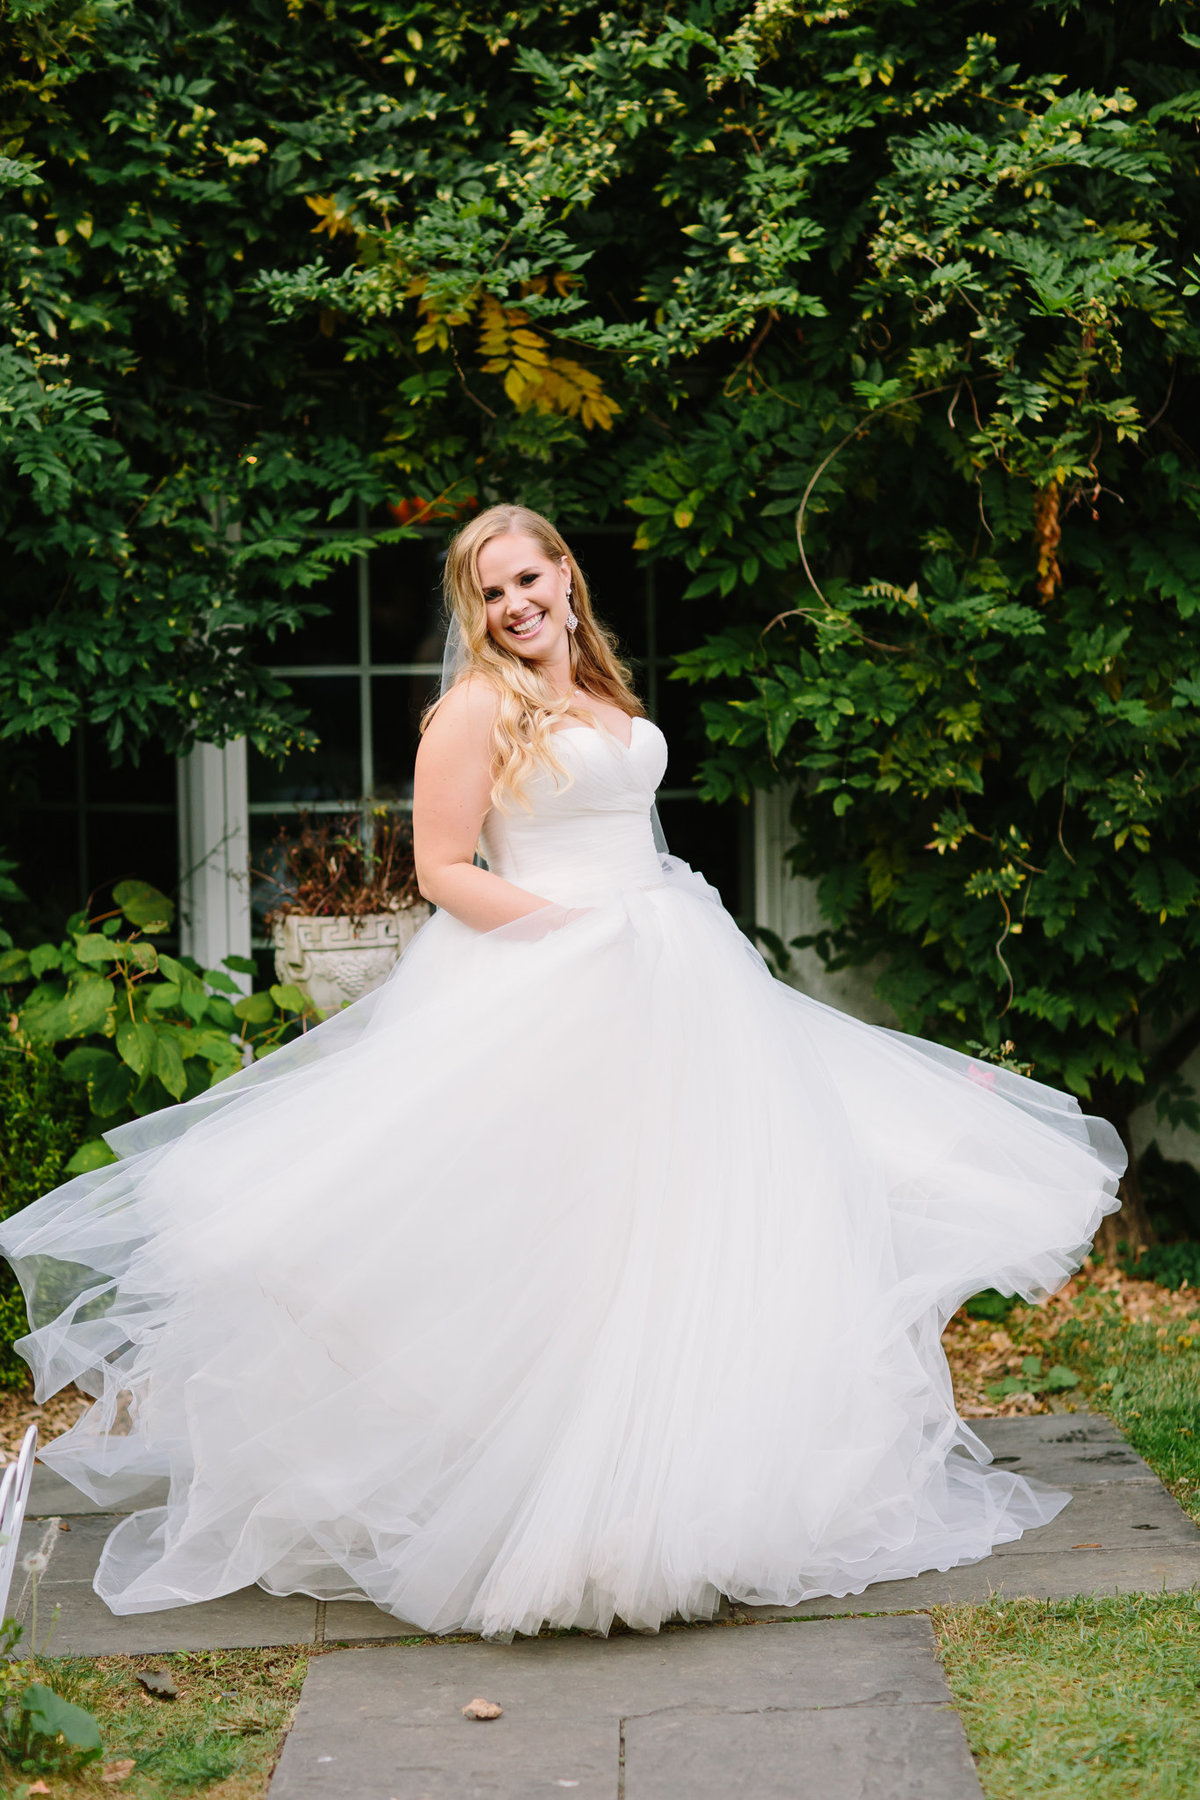 Beautiful bride twirling in princess dress